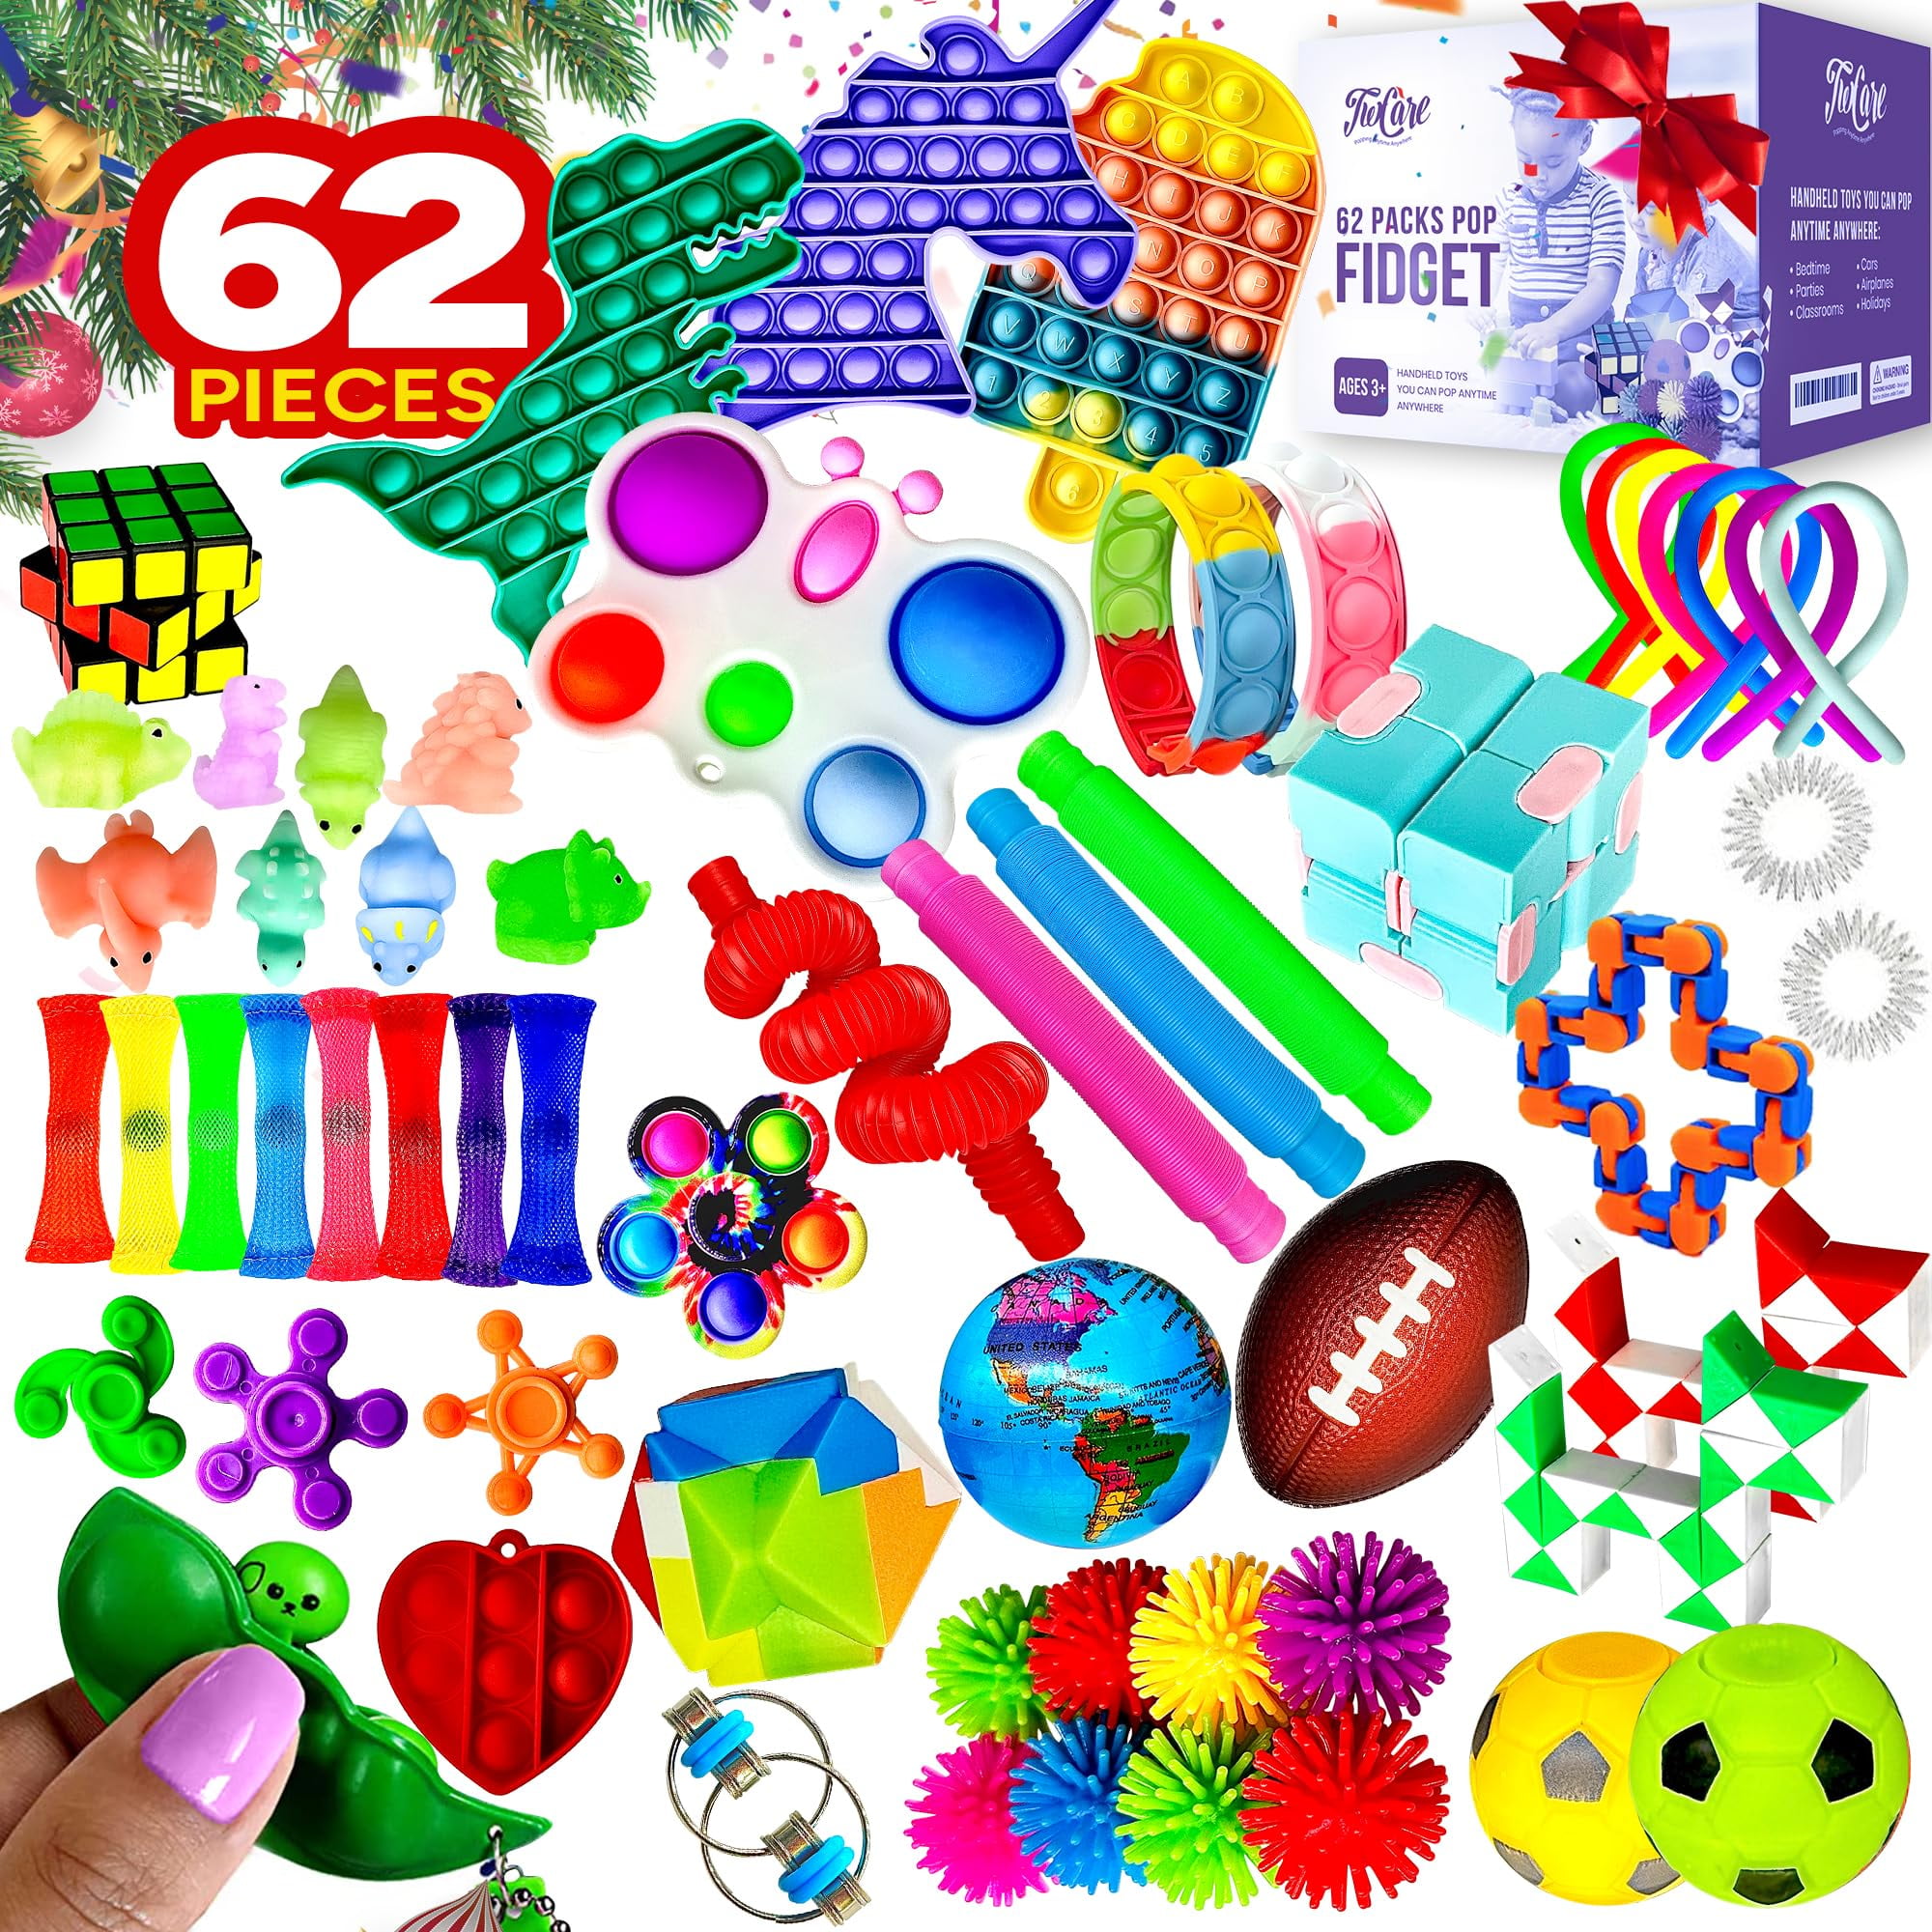 32 Pcs Bracelets Glow in The Dark Pop It Fidget Toy, Rainbow Party Favors, Anti-Anxiety Stress Relief Wristband Set, Push Bubbles Sensory Autistic